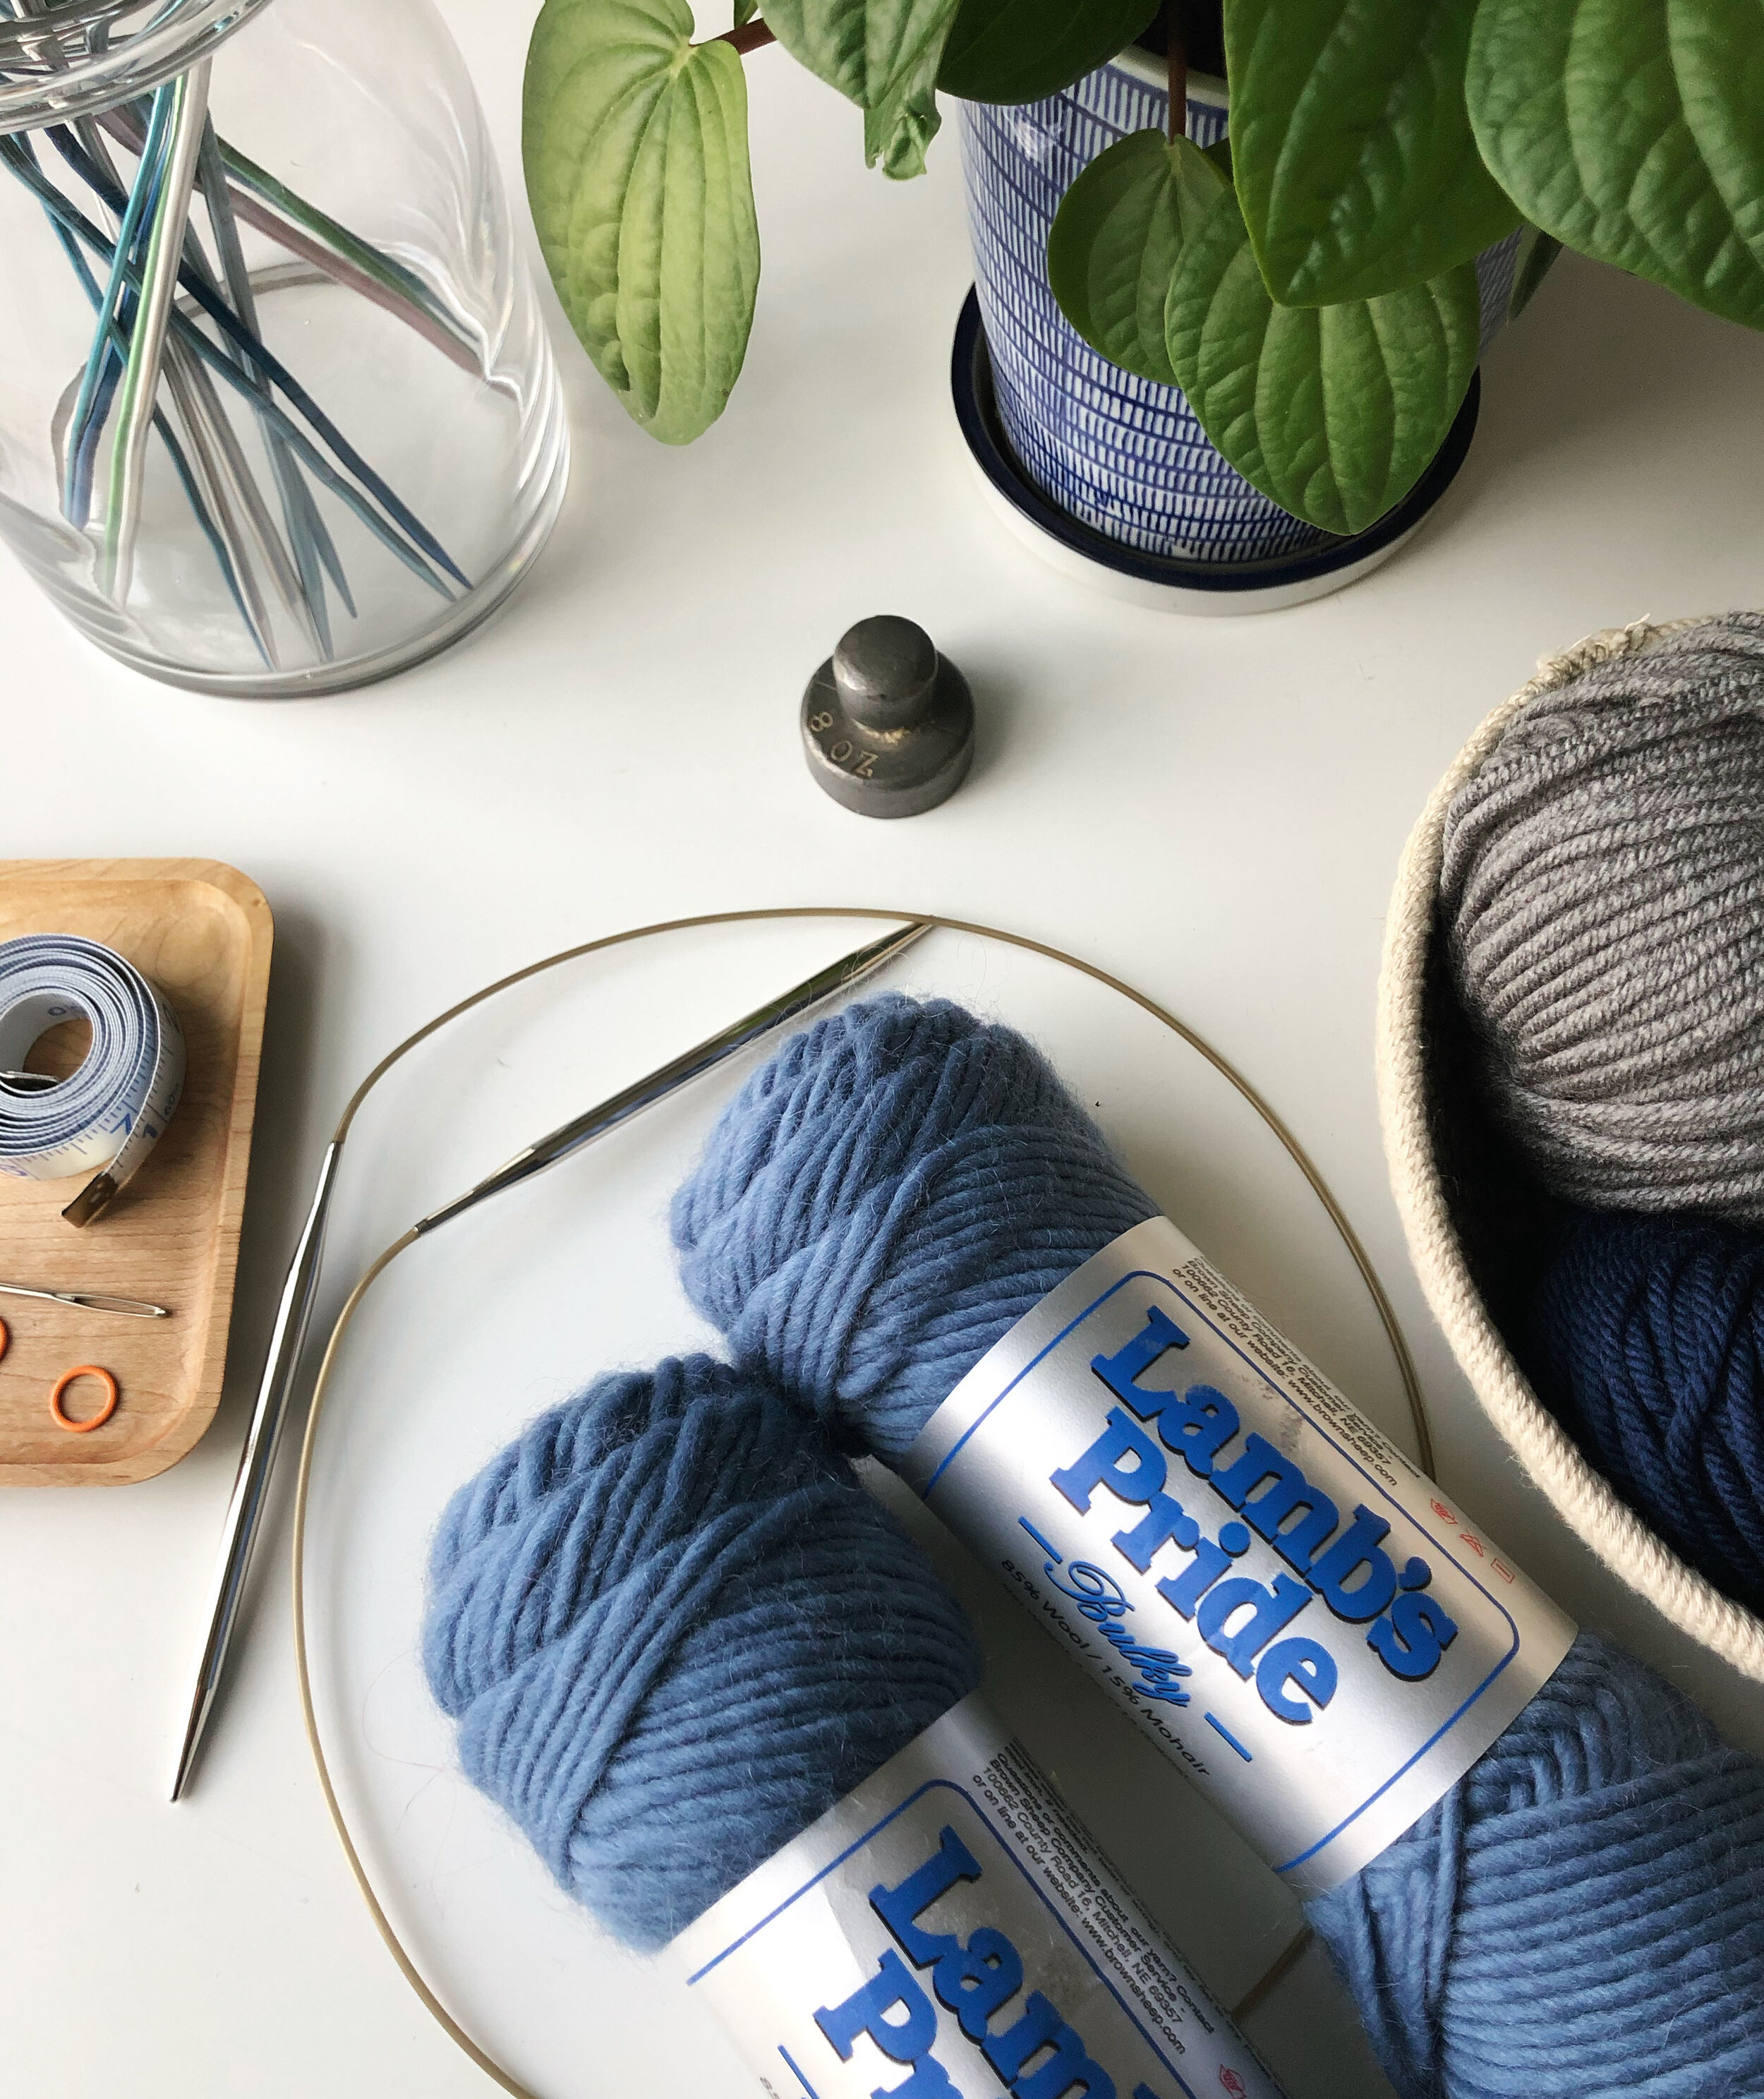 Beginning Knitting Kit (Basic) | Lamb's Pride Bulky & Knitting Instruction  Book